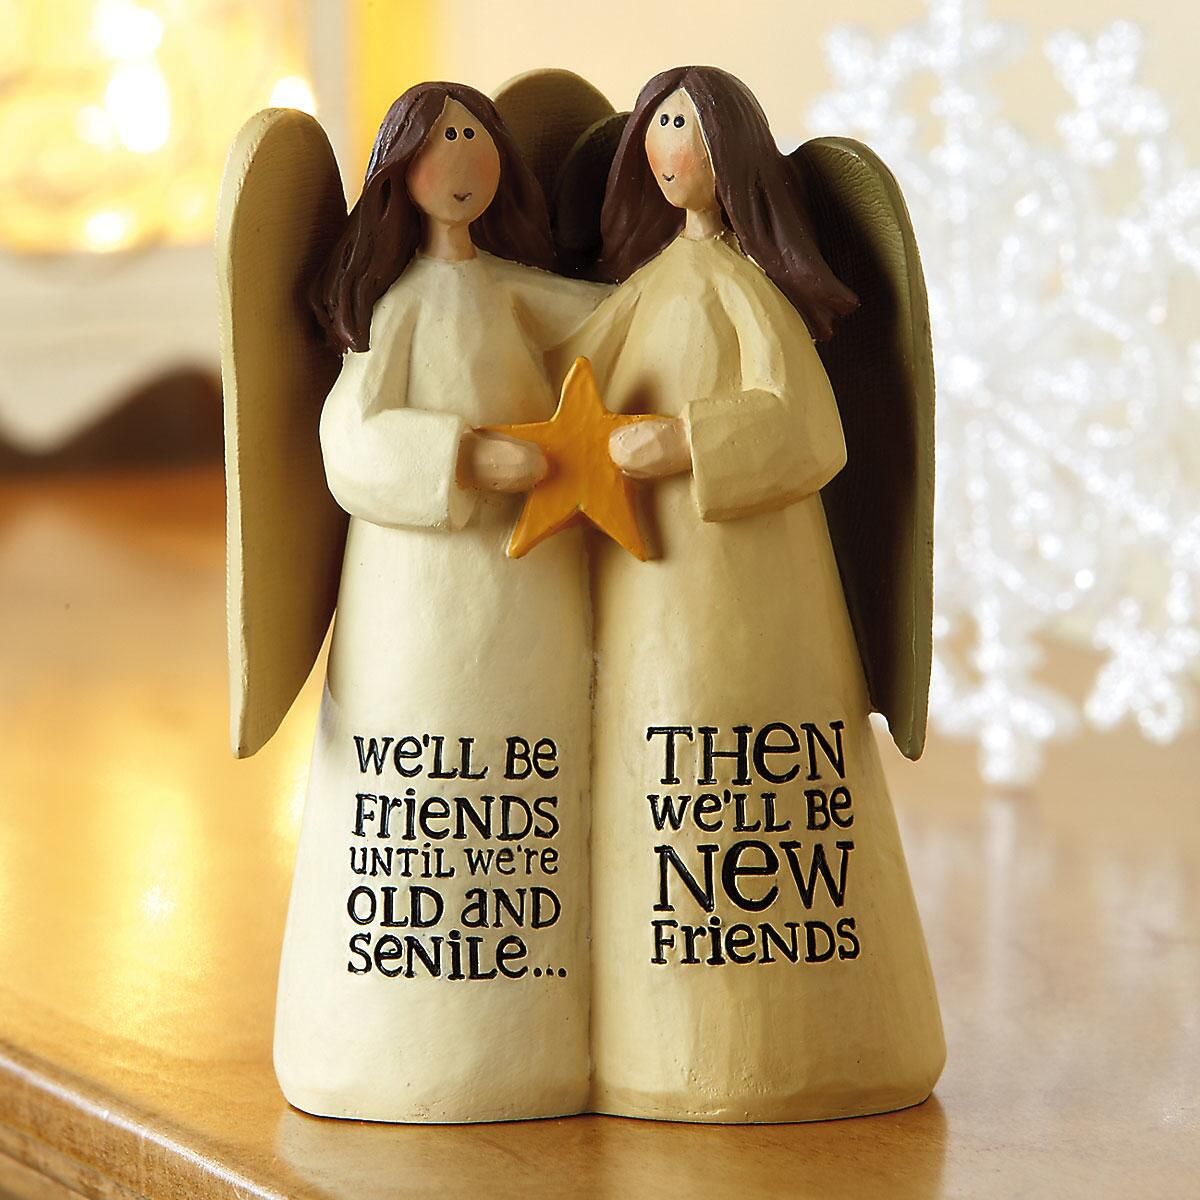 we-ll-be-friends-angels-figurine.jpg